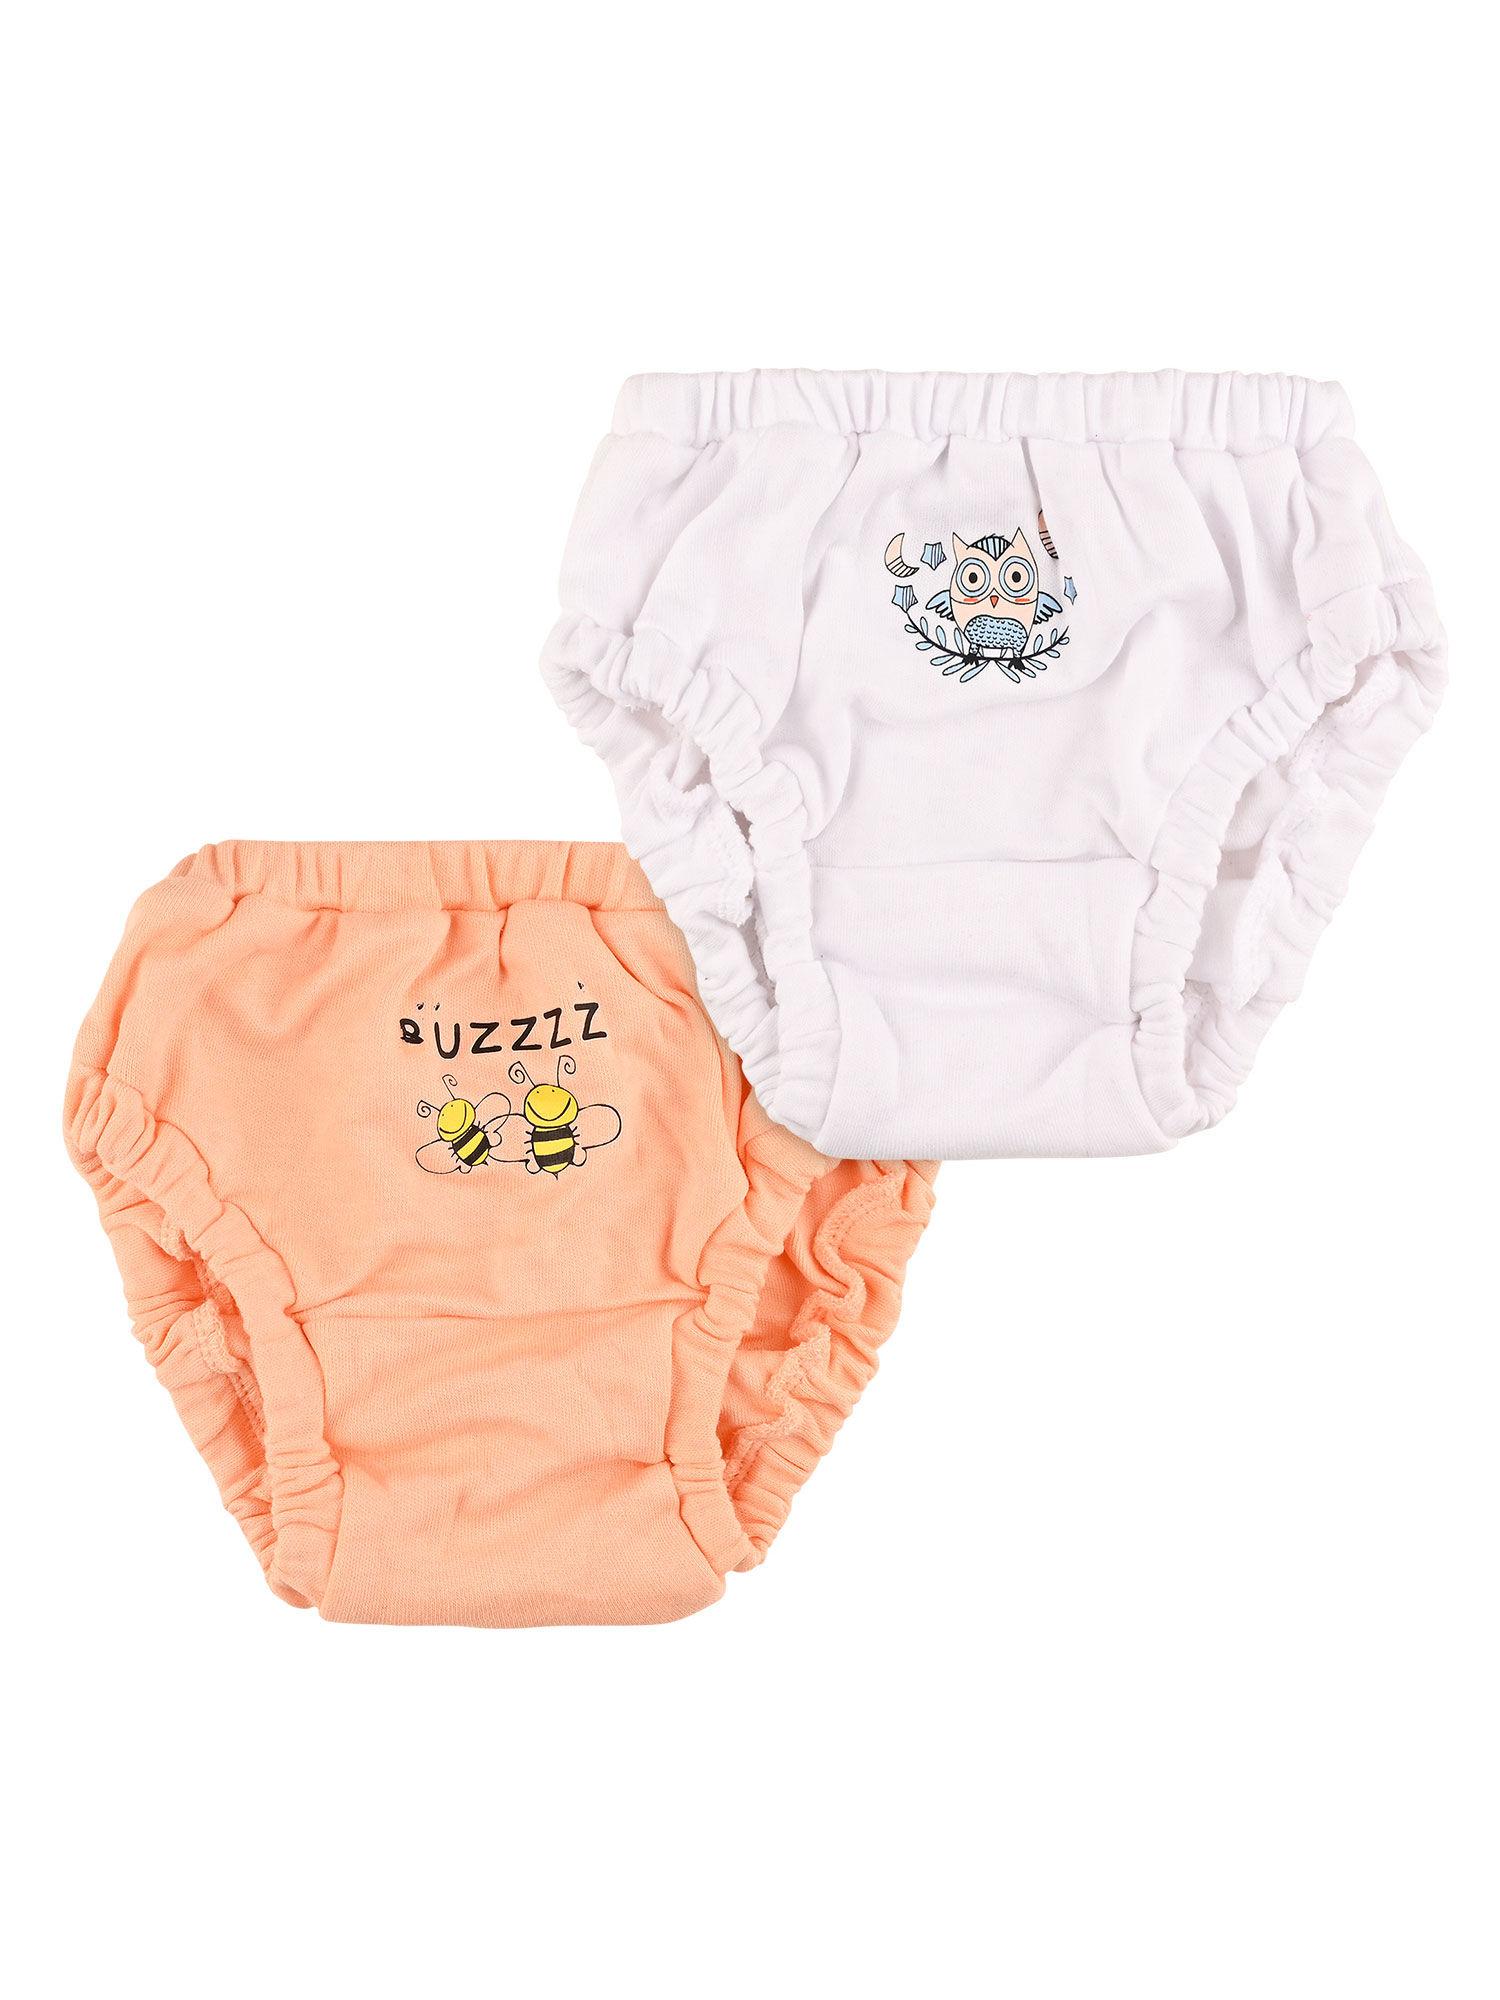 Baby Girls Printed Bloomer Brief Underwear Orange and White (Pack of 2)